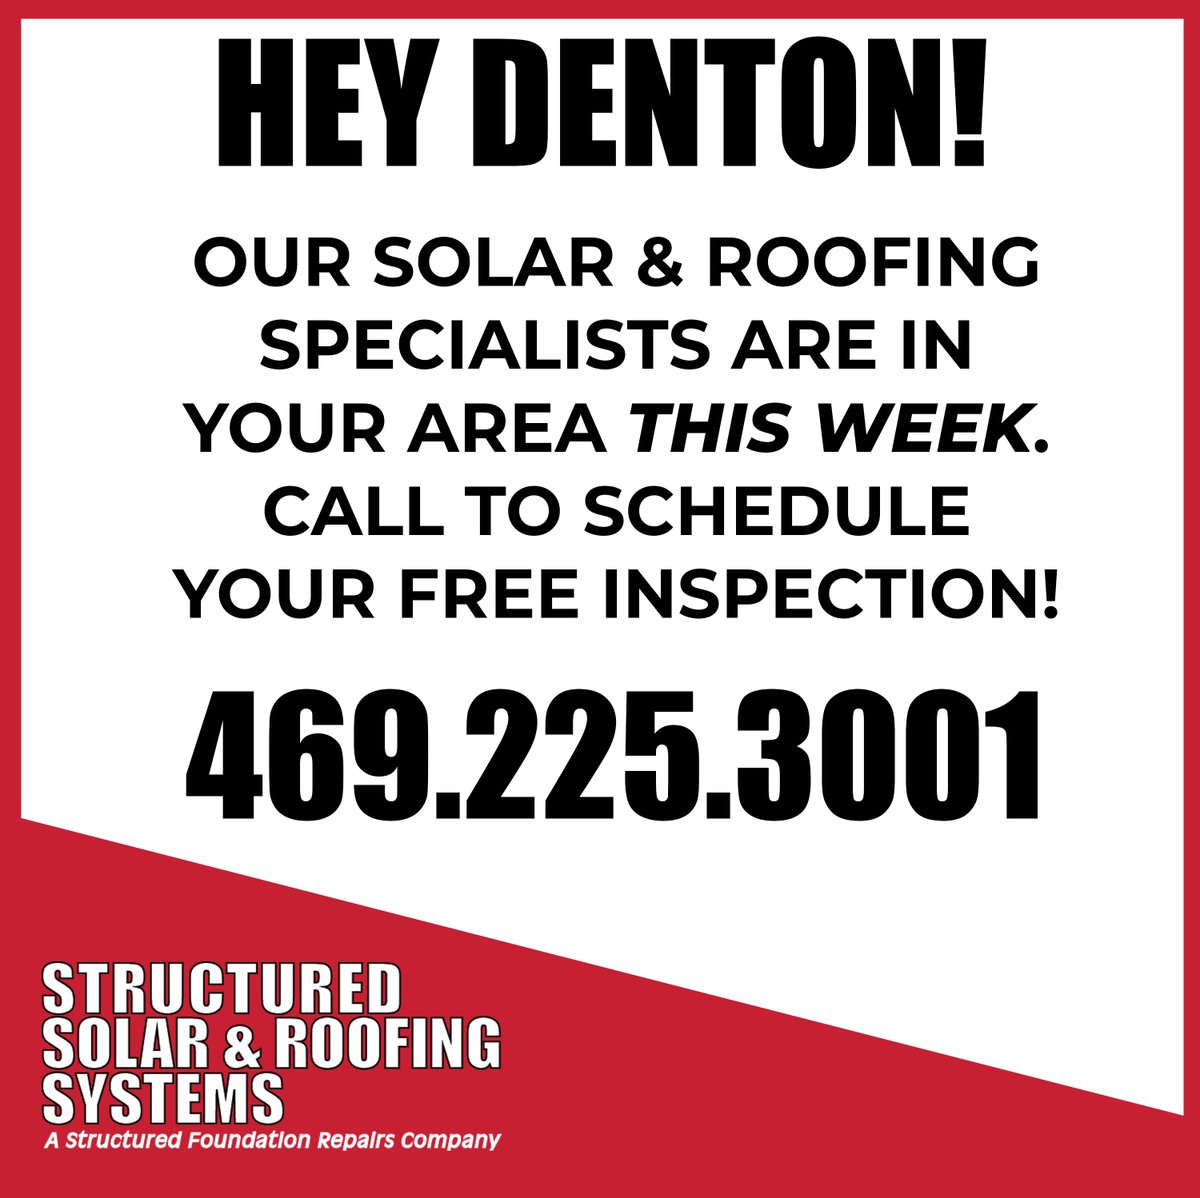 Our Roofing Specialists are in and around the Denton area this week.  Call now to schedule your FREE inspection! 

#freeinspection #DentonTX #CorinthTX #LakeDallasTX #HickoryCreekTX #ShadyShoresTX #SangerTX #PonderTX #ArgyleTX #JustinTX #PilotPointTX #roofinginspection